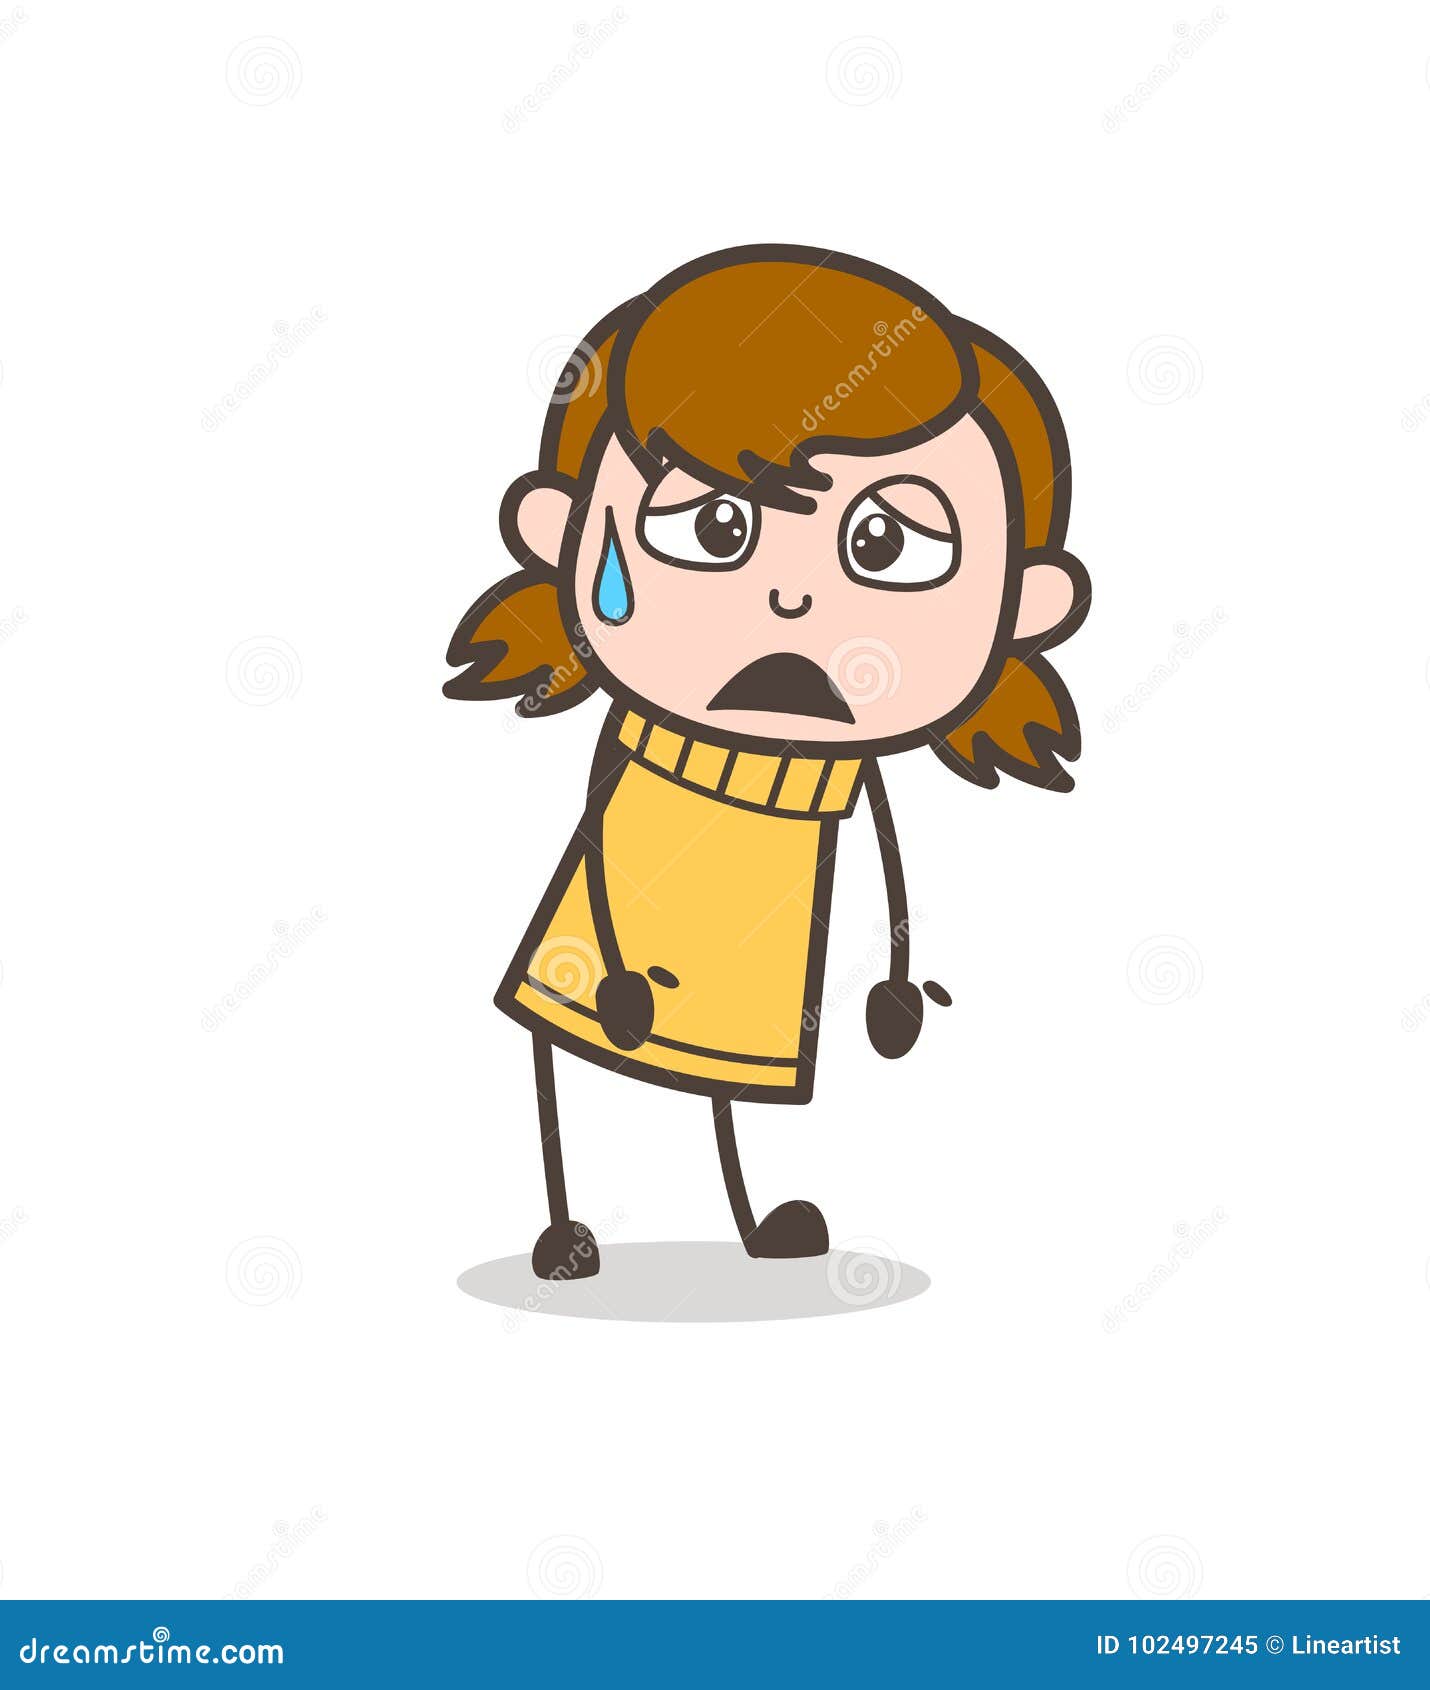 Tired Face with Sweat - Cute Cartoon Girl Illustration Stock Illustration -  Illustration of cute, pretty: 102497245